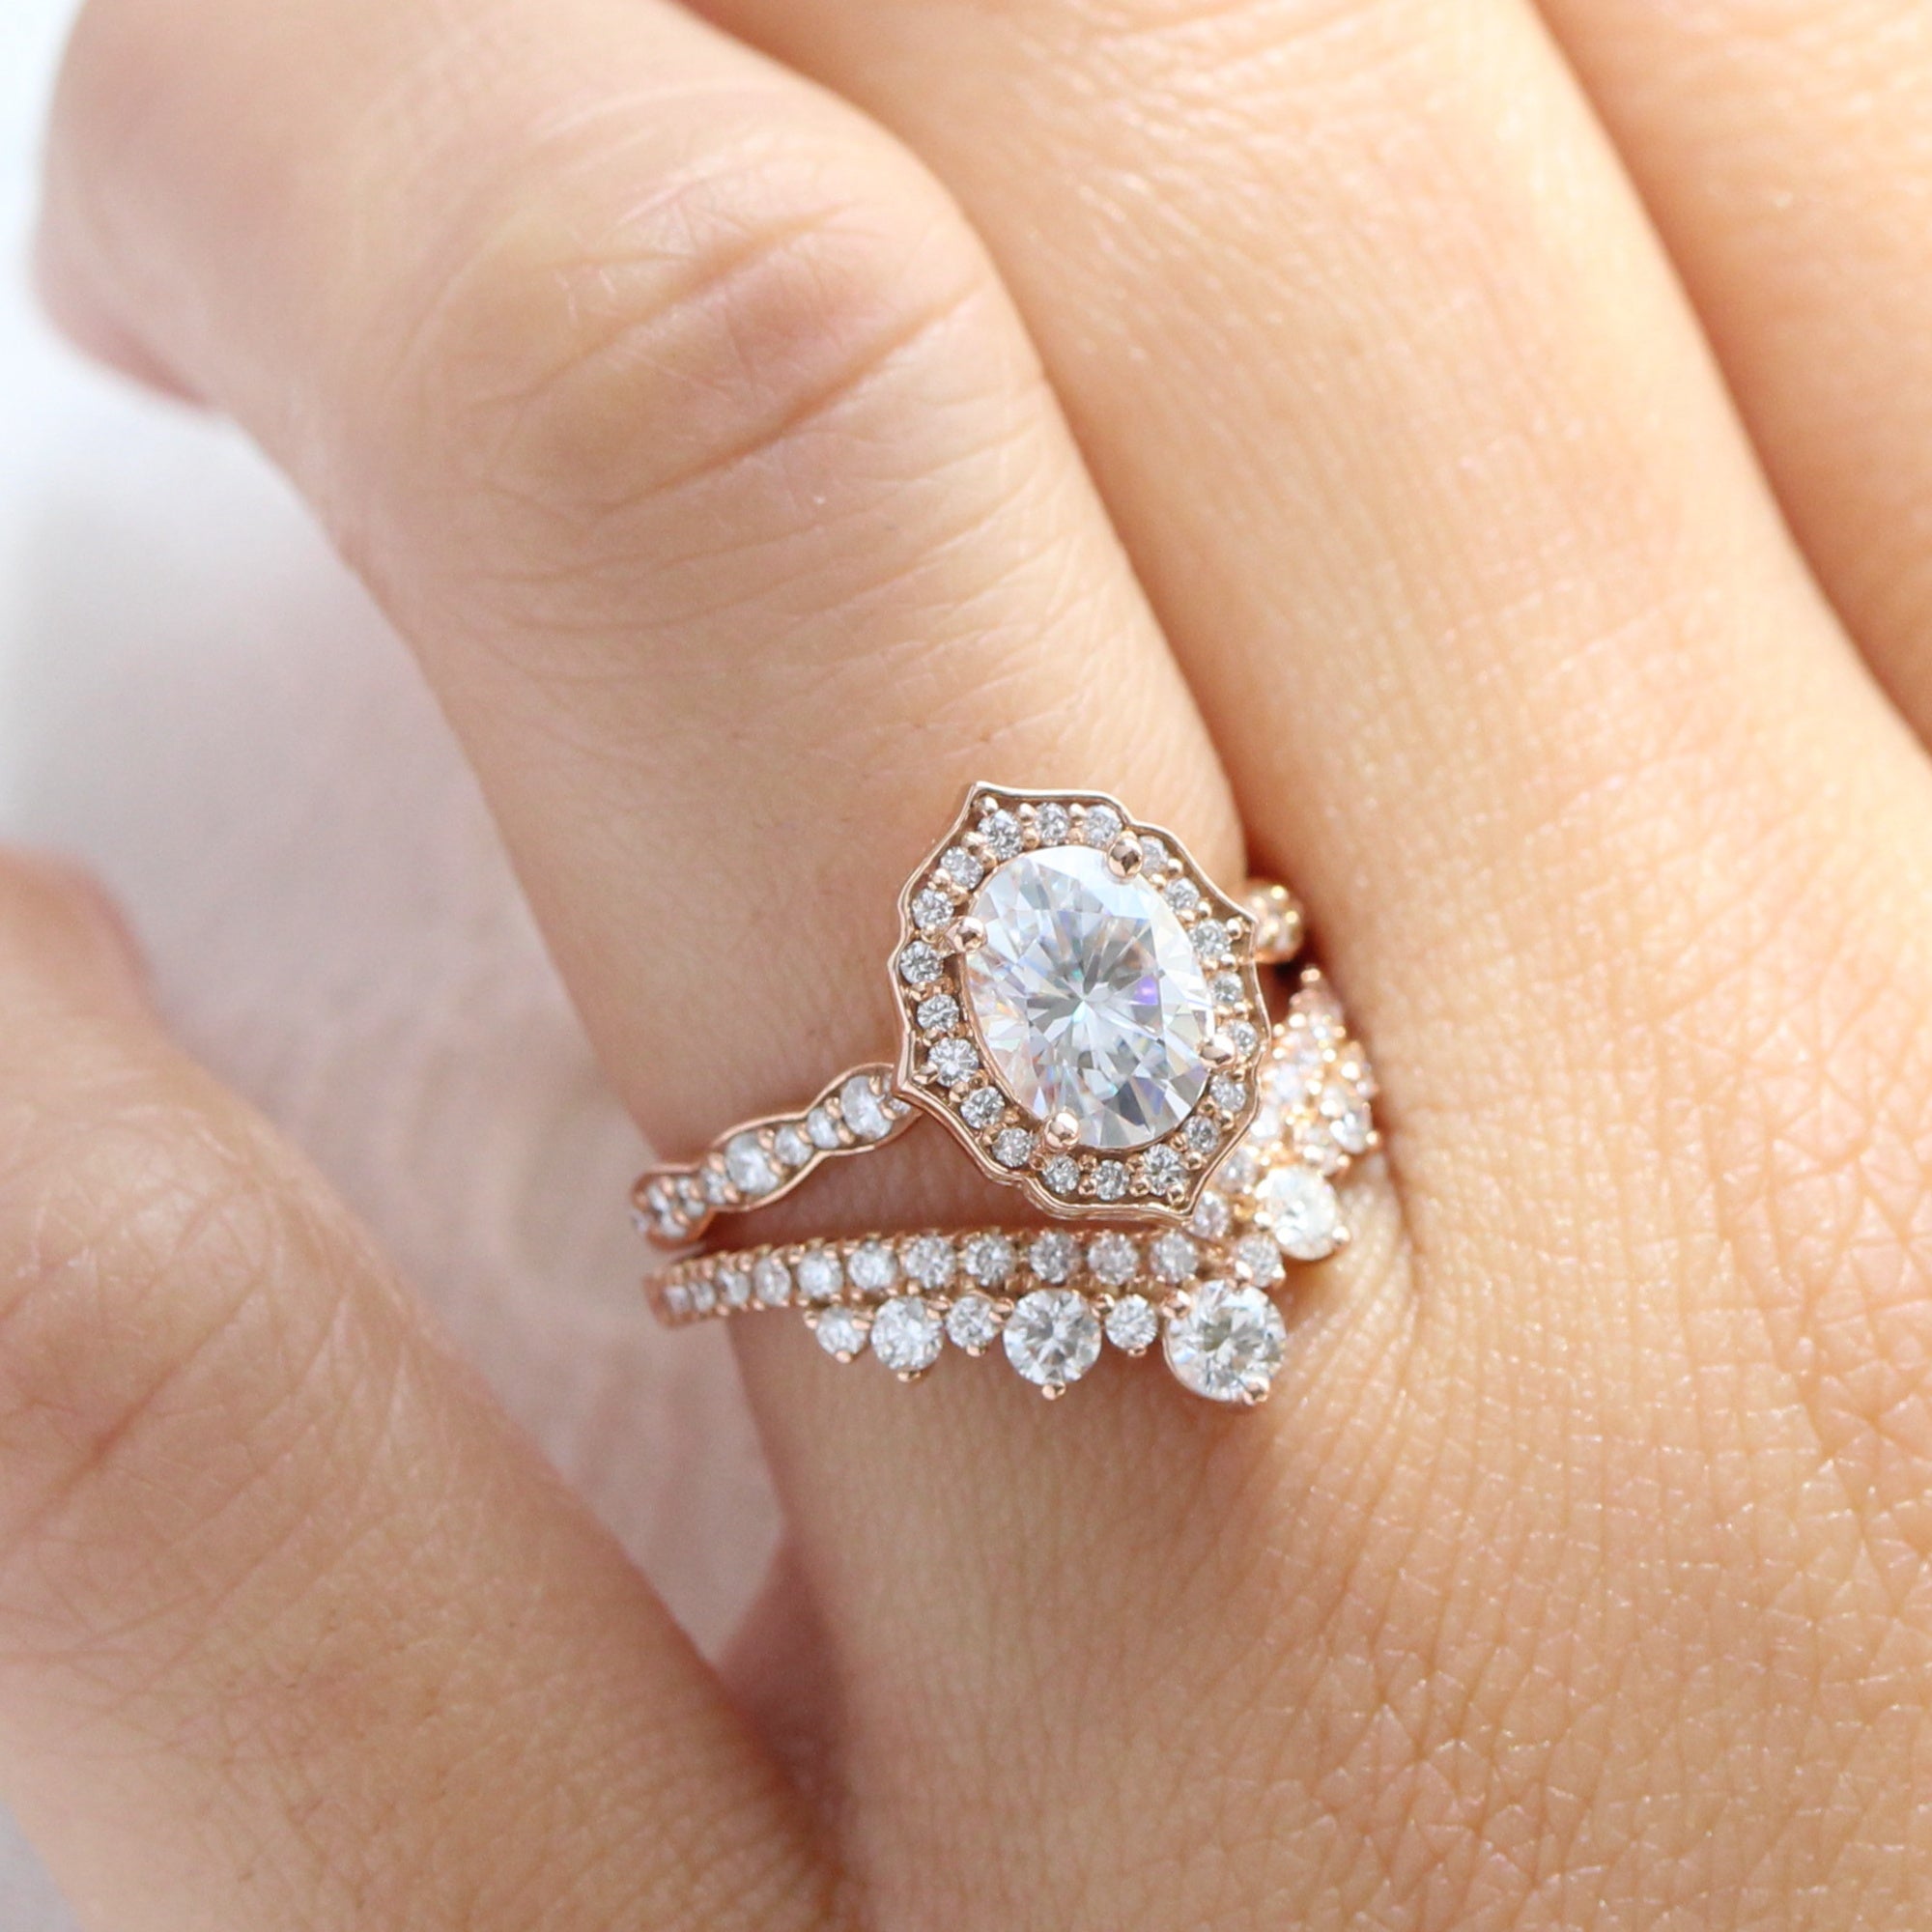 vintage floral moissanite ring bridal set rose gold large diamond v shaped wedding band la more design jewelry